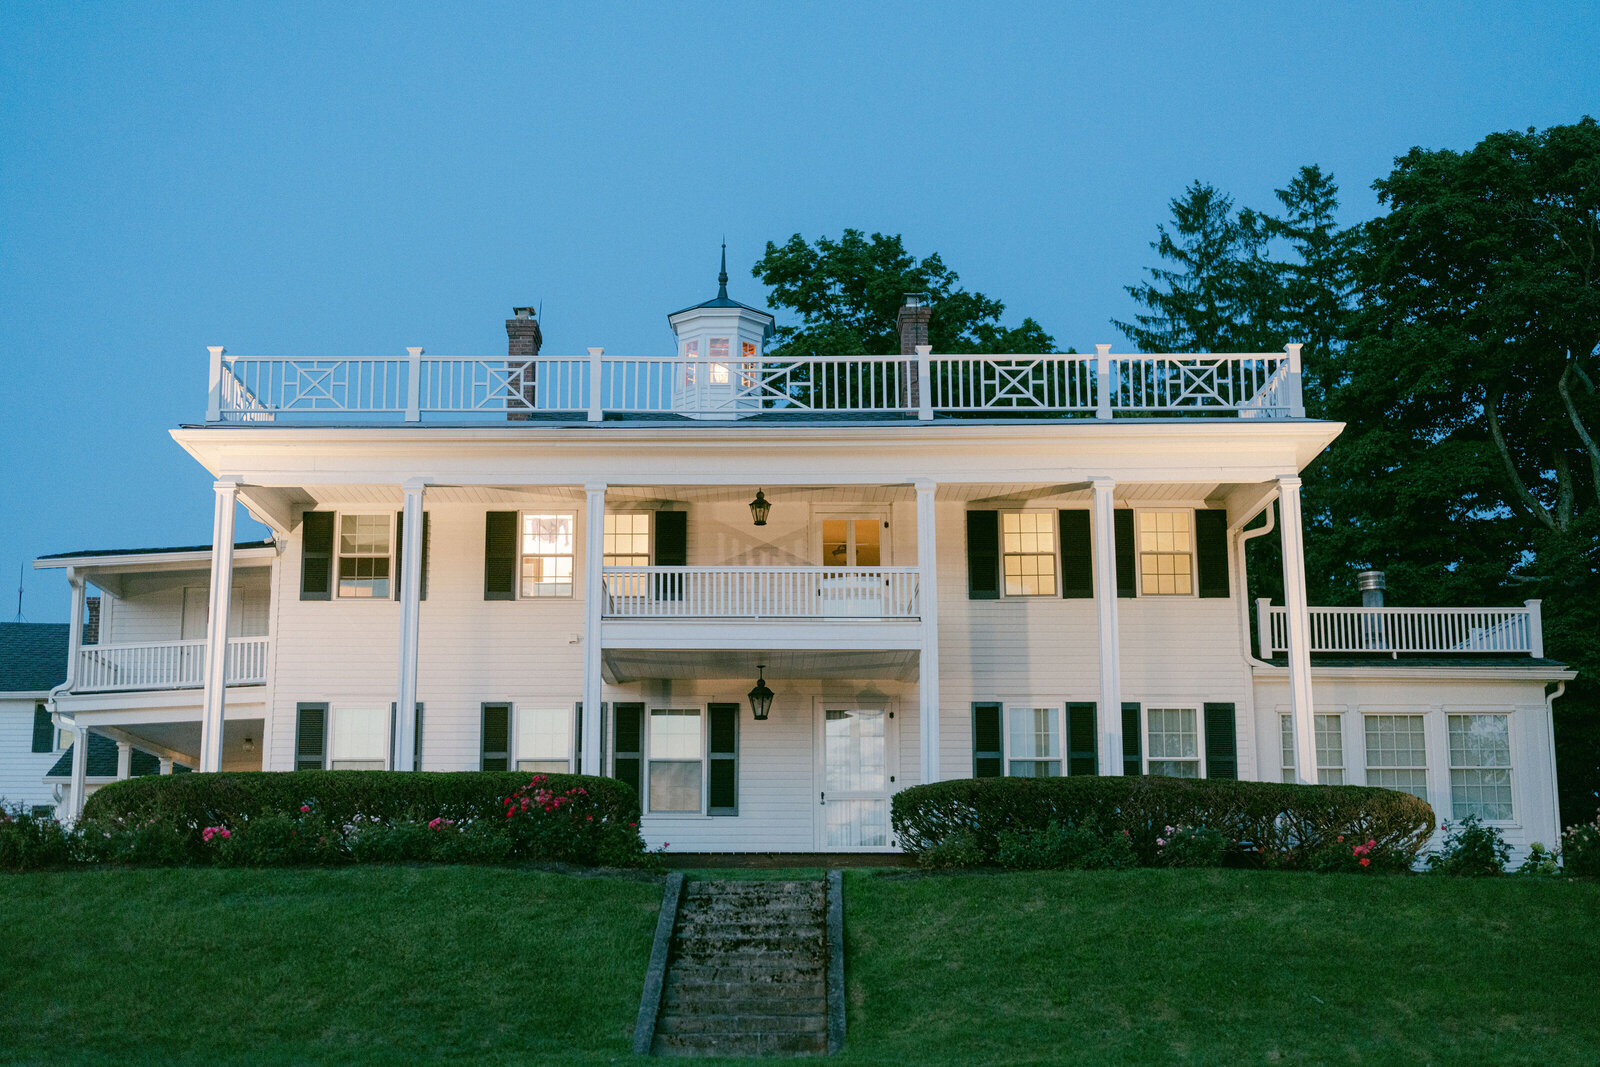 historic white home on estate at dusk with uplighting at Windridge